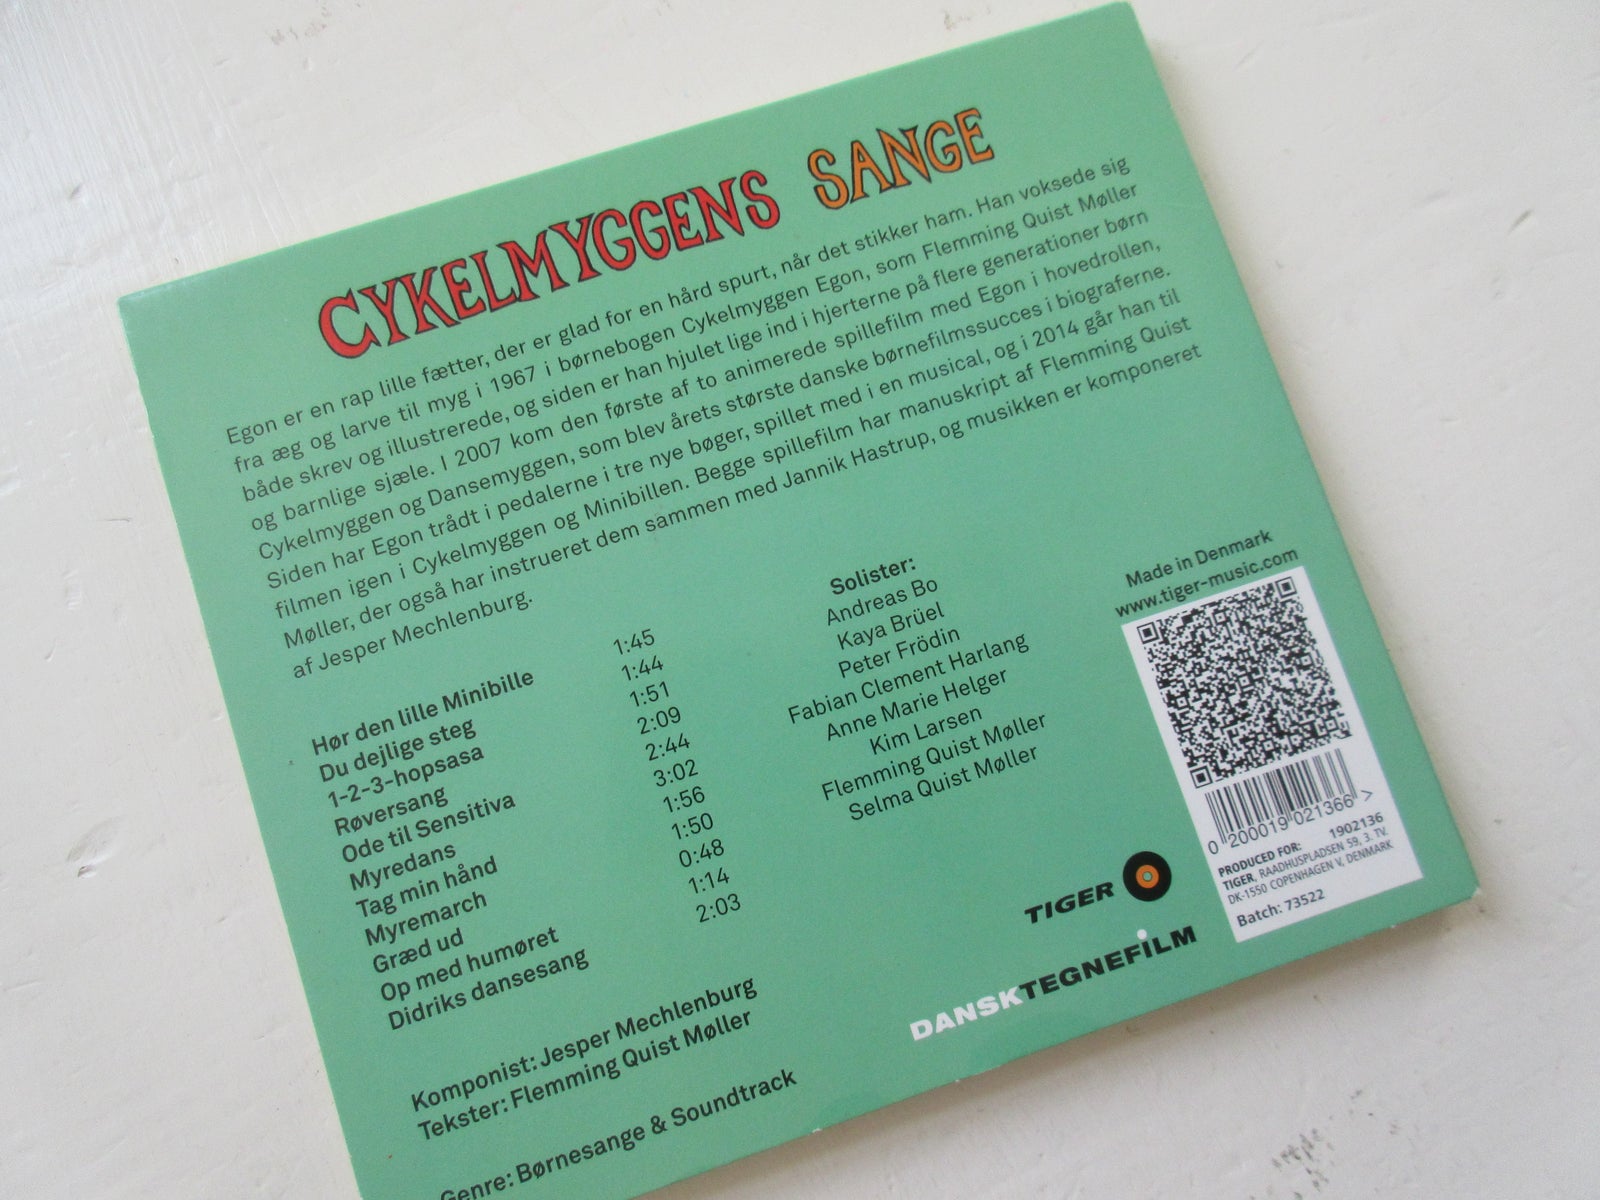 Kim Larsen m.fl.: Cykelmyggens sange, pop